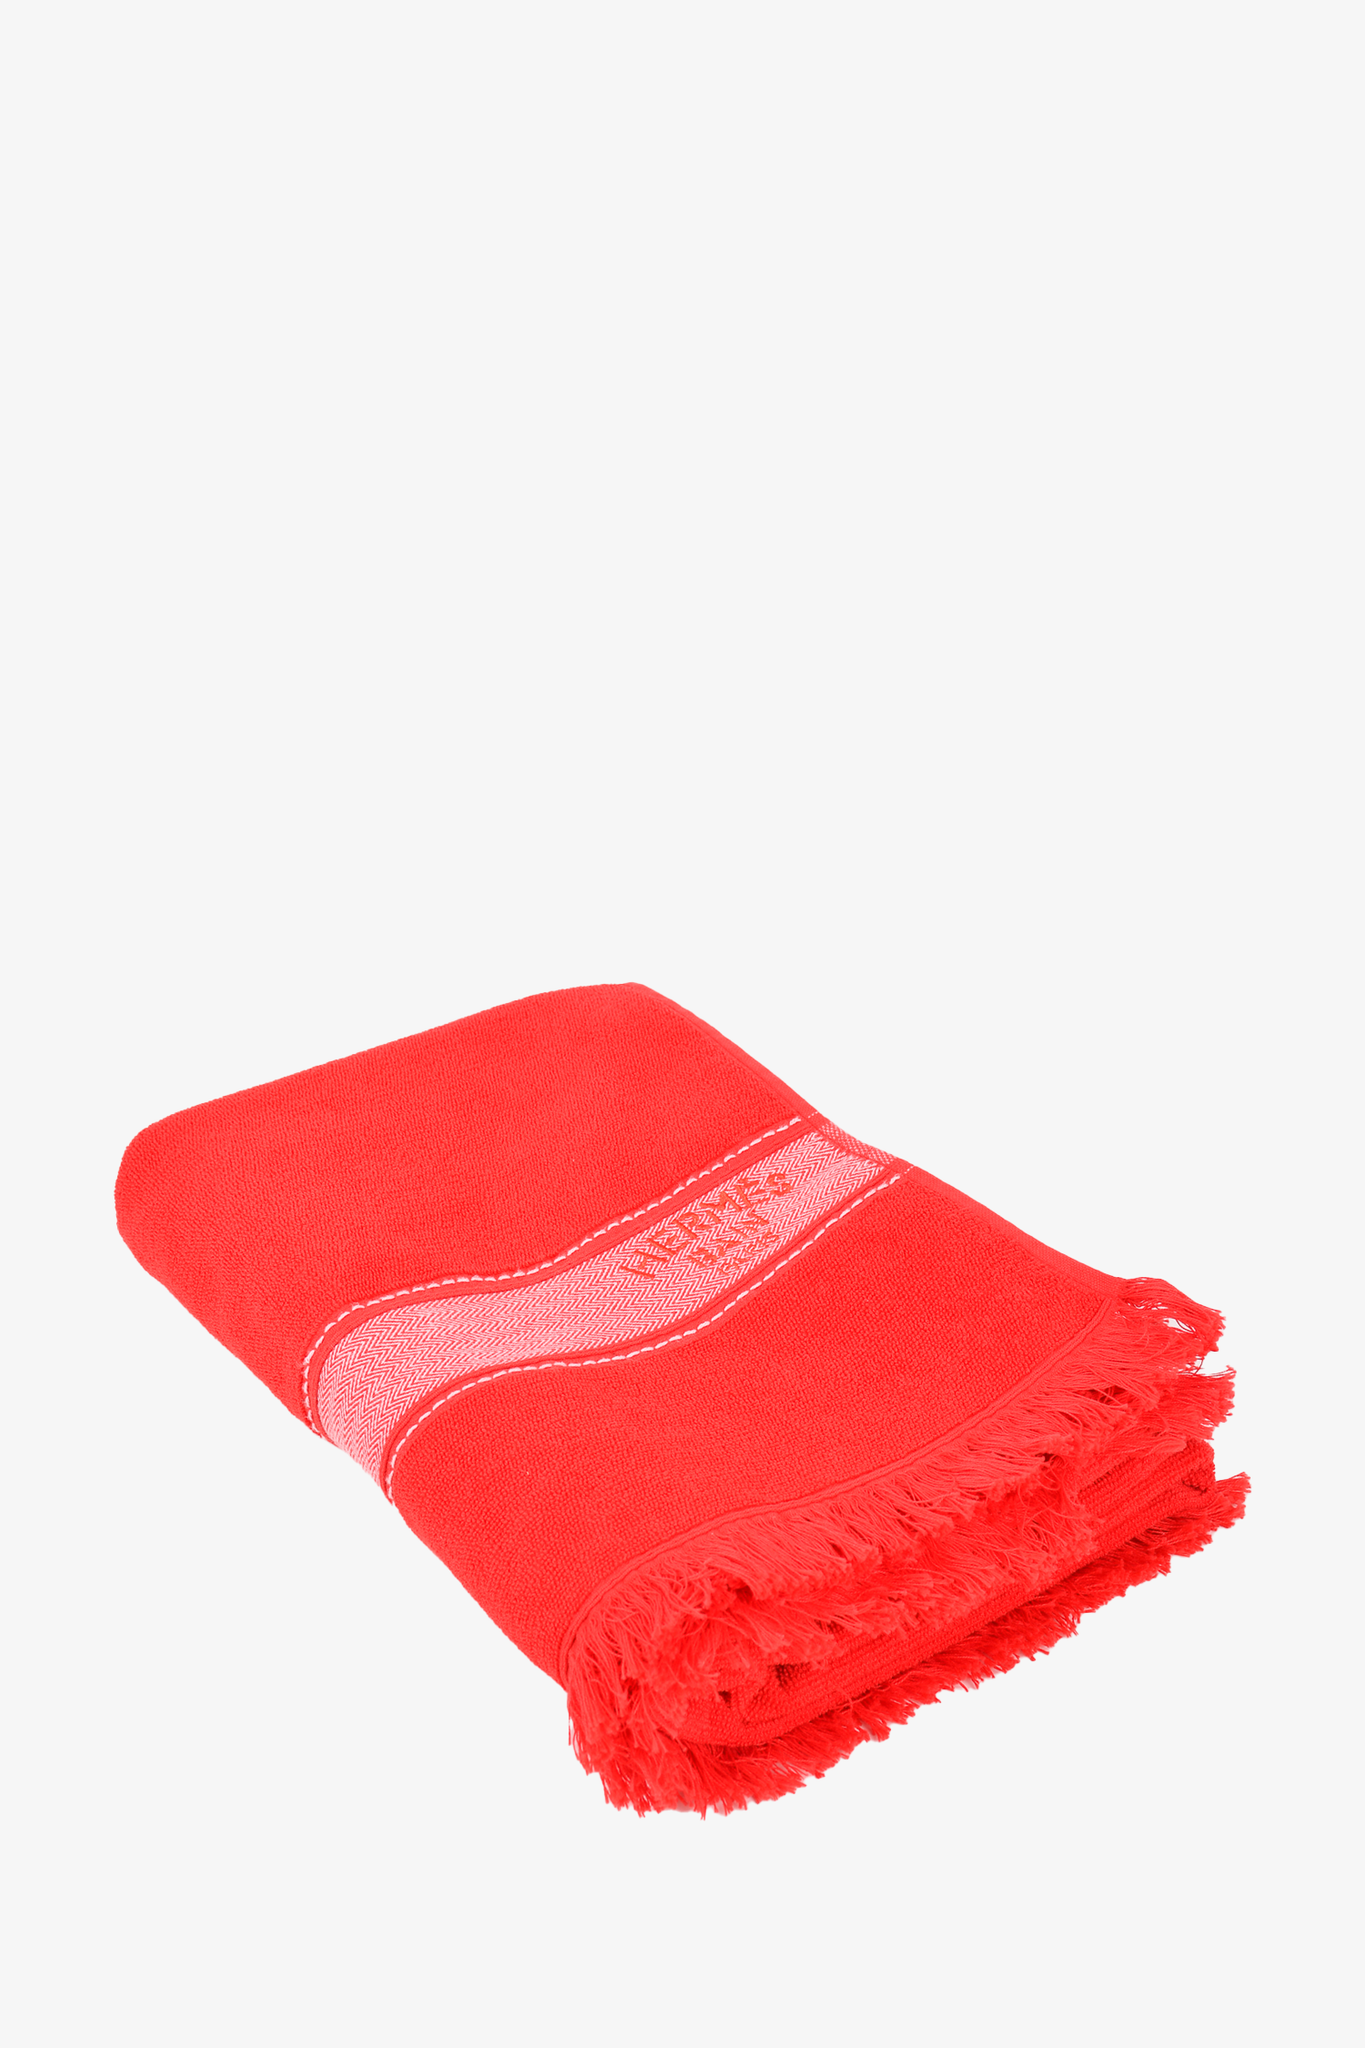 Hermes Red Terry Cloth Beach Towel